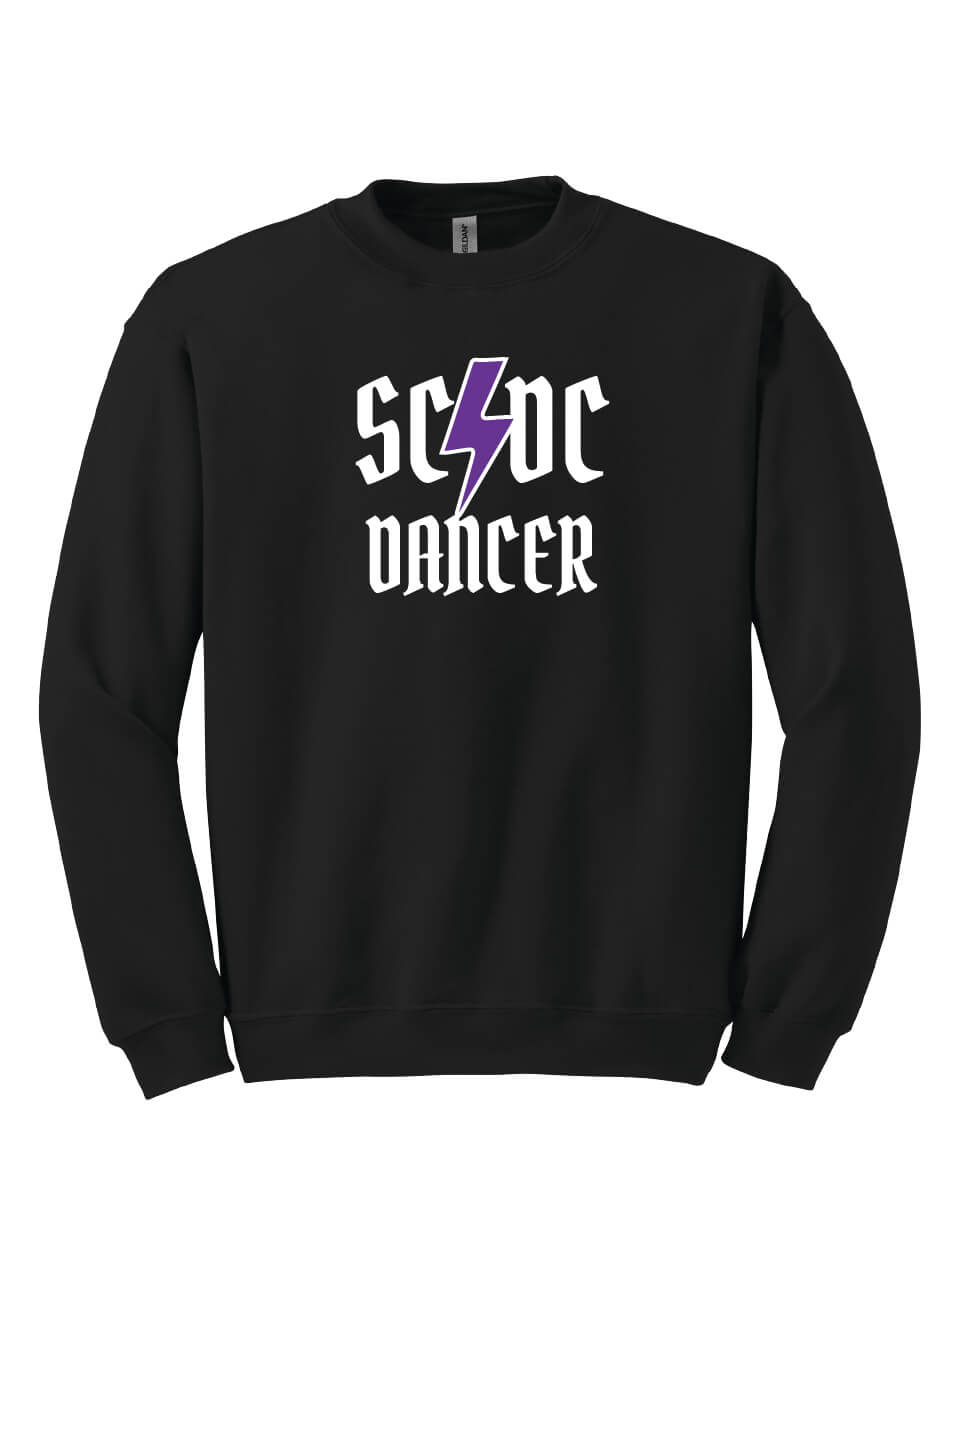 SCDC Dancer Crewneck Sweatshirt black